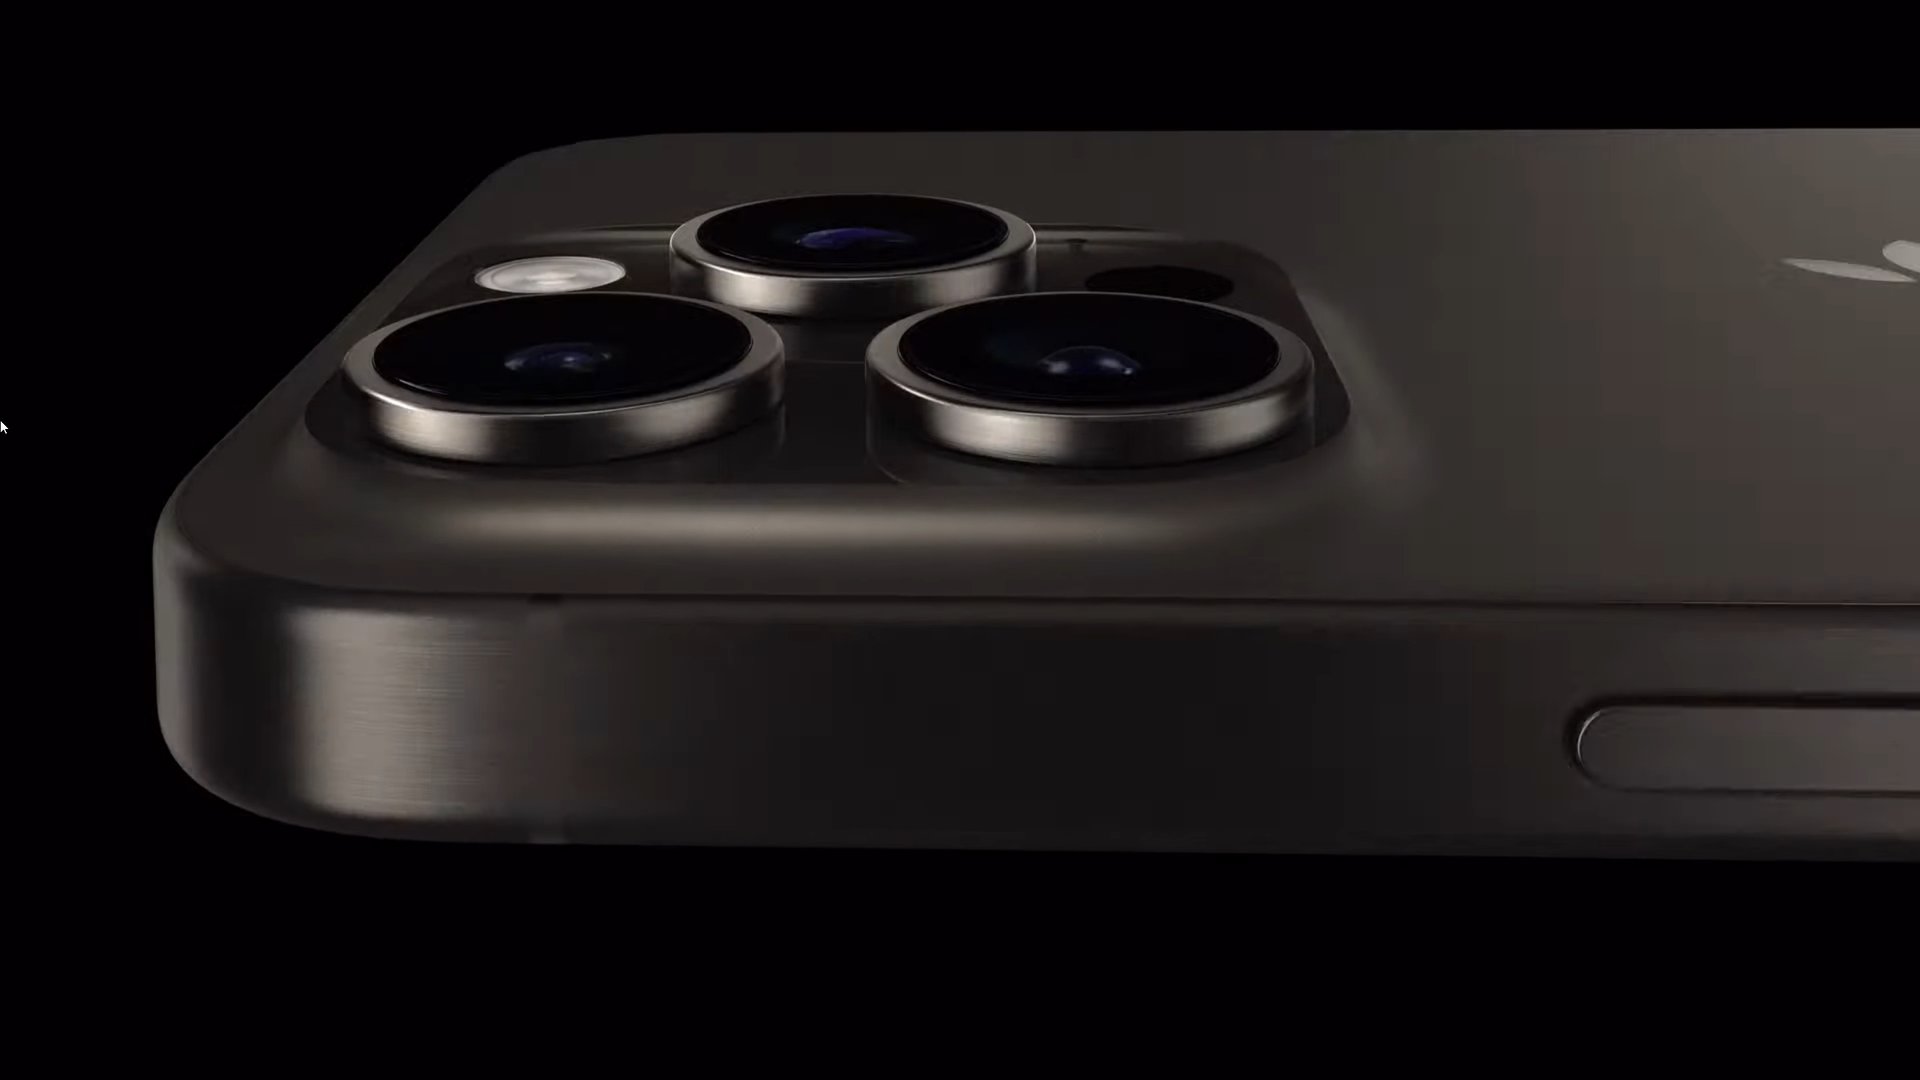 PlayStation 4 Pro 1TB HDD (Jet Black) [Fortnite Neo Versa Bundle]